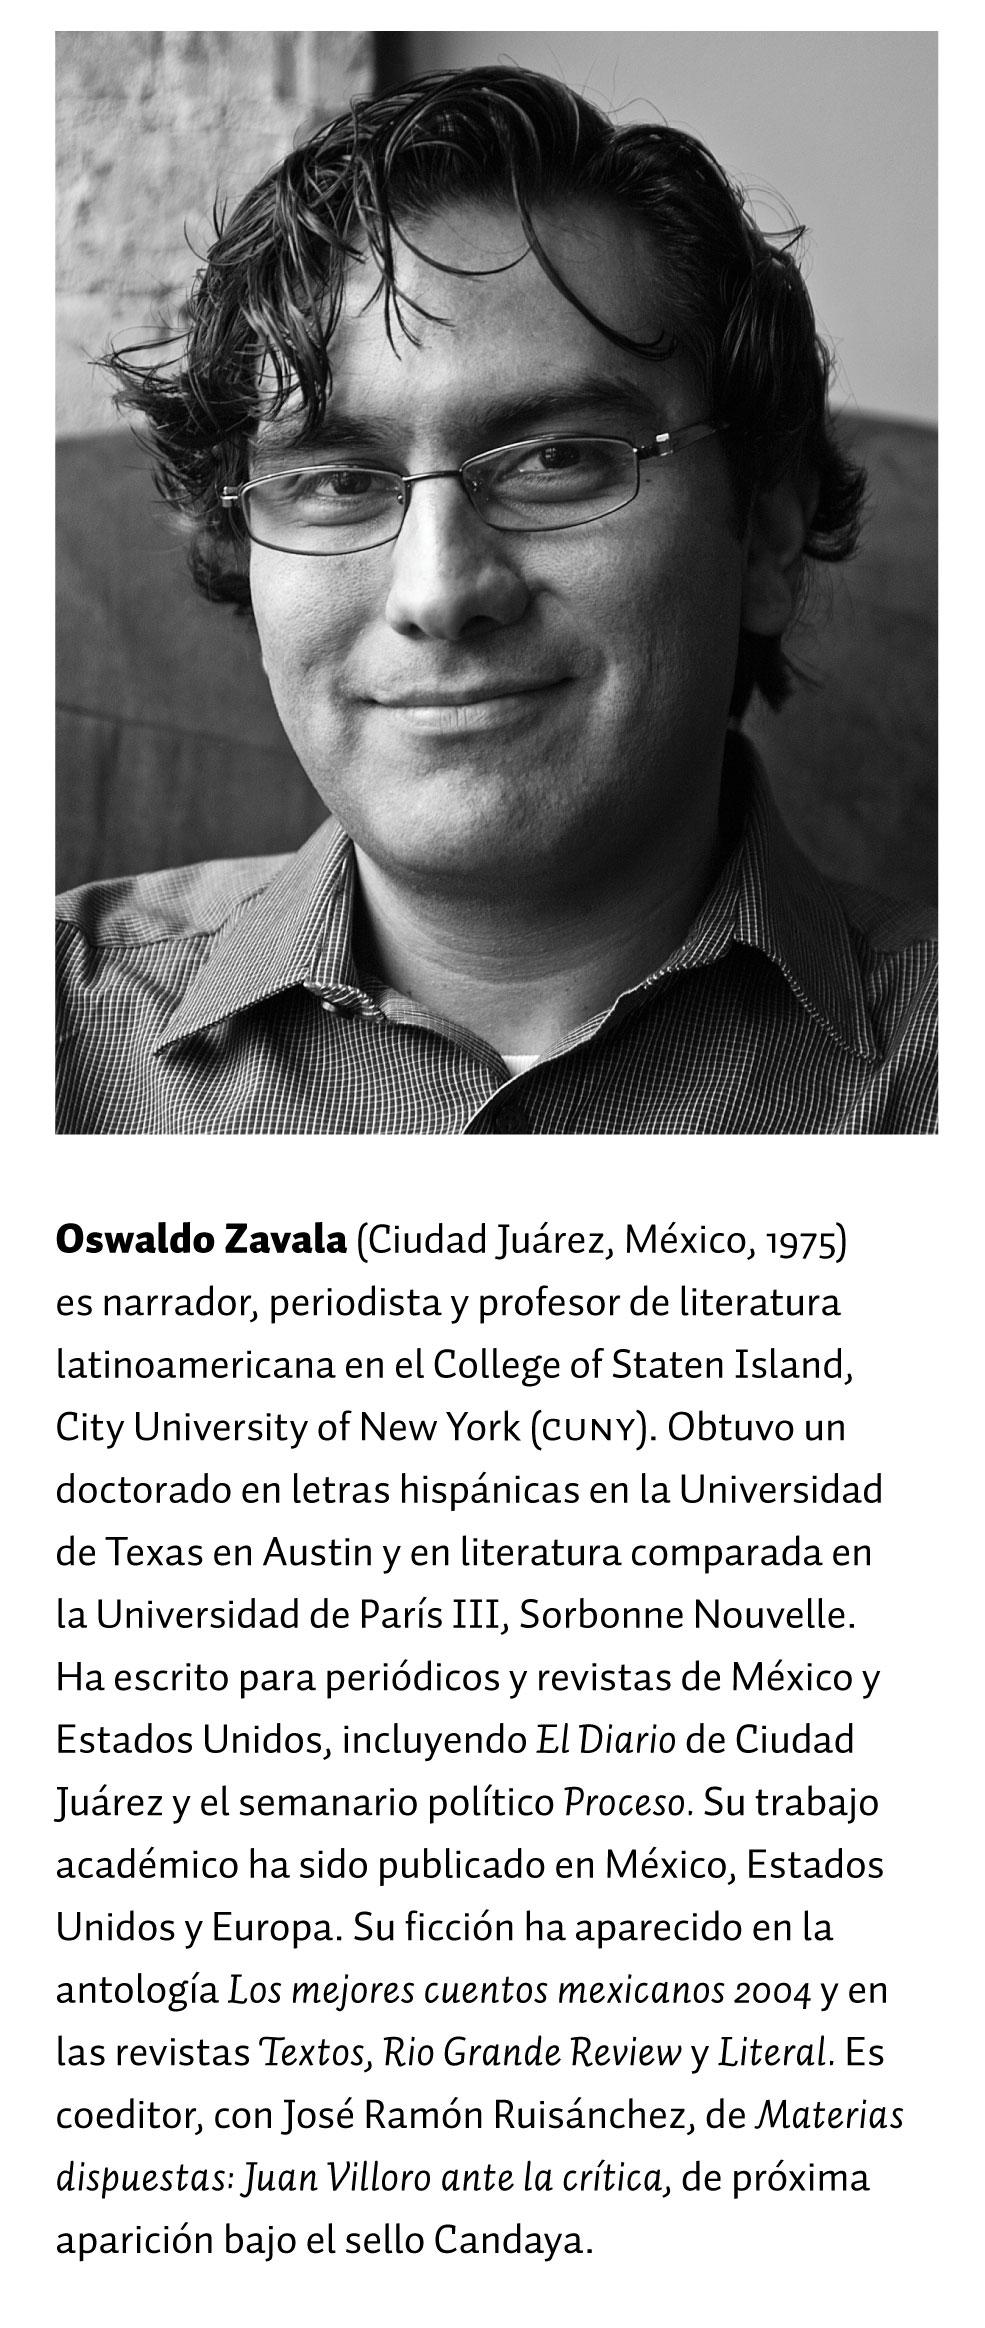 Oswaldo Zavala, Siembra de nubes, editorial Praxis. Rencontre vendredi 22 juillet à 19h à la librairie